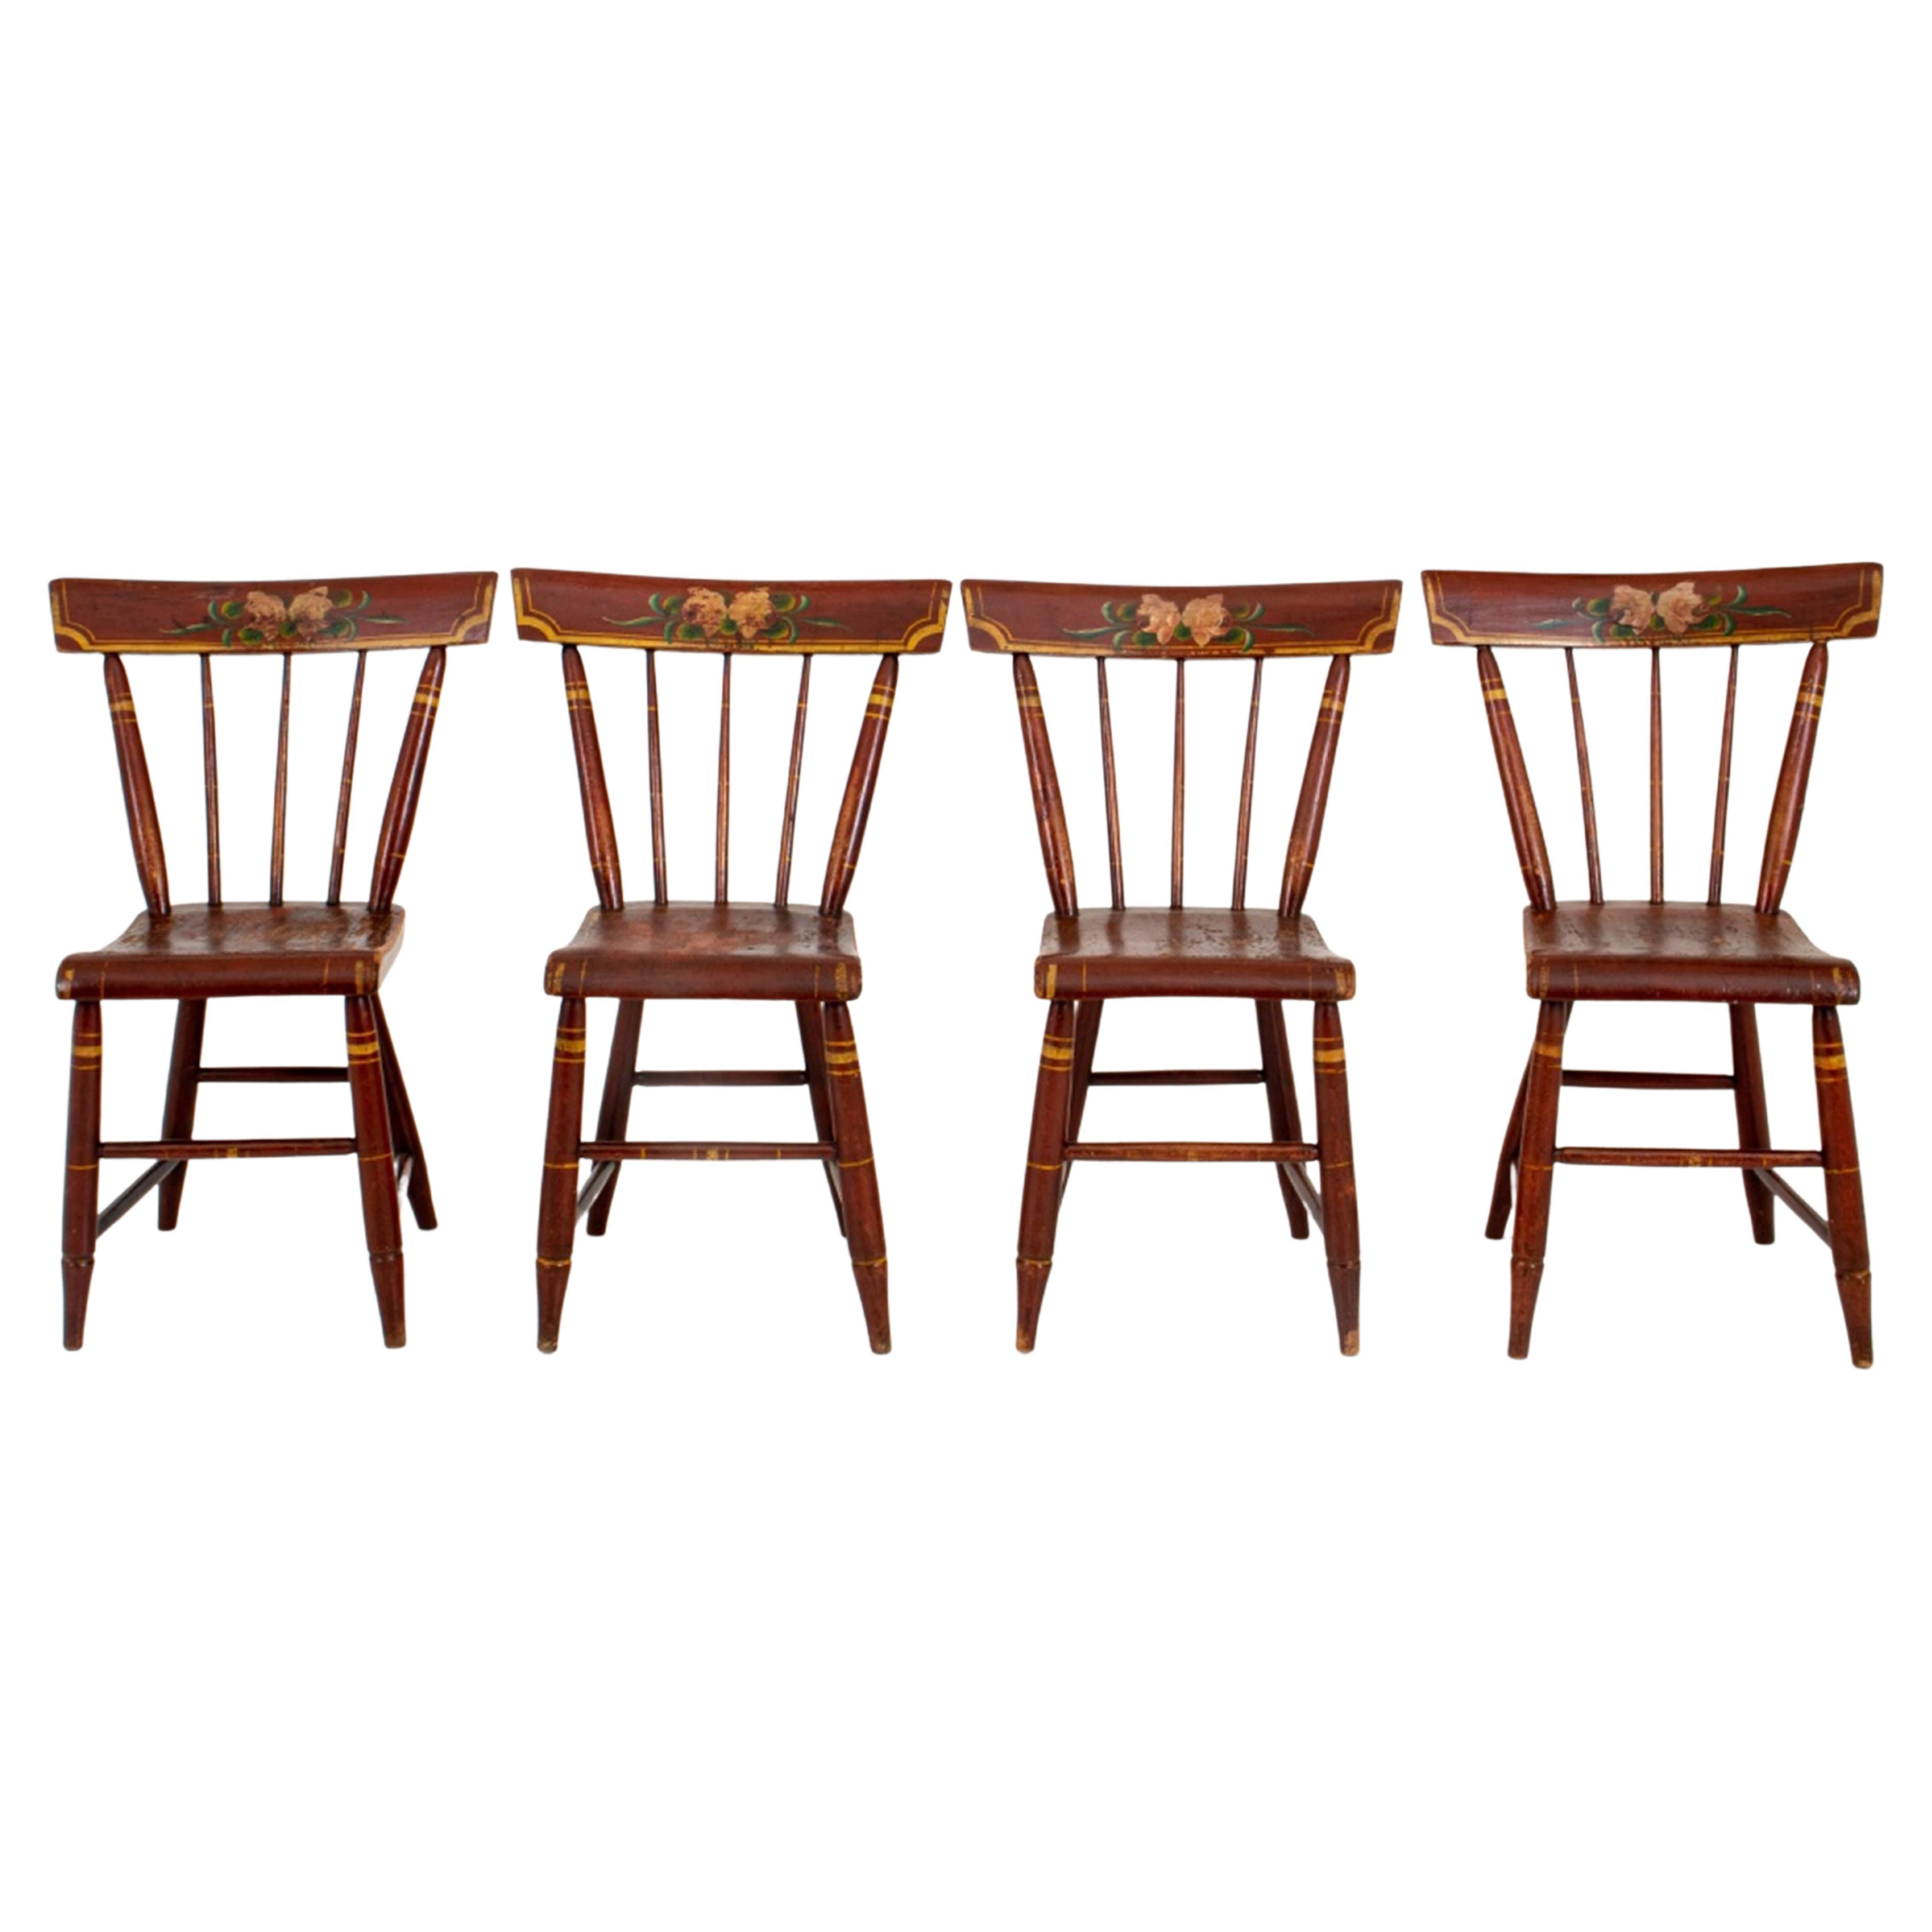 American Folk Art Style Chairs, 4